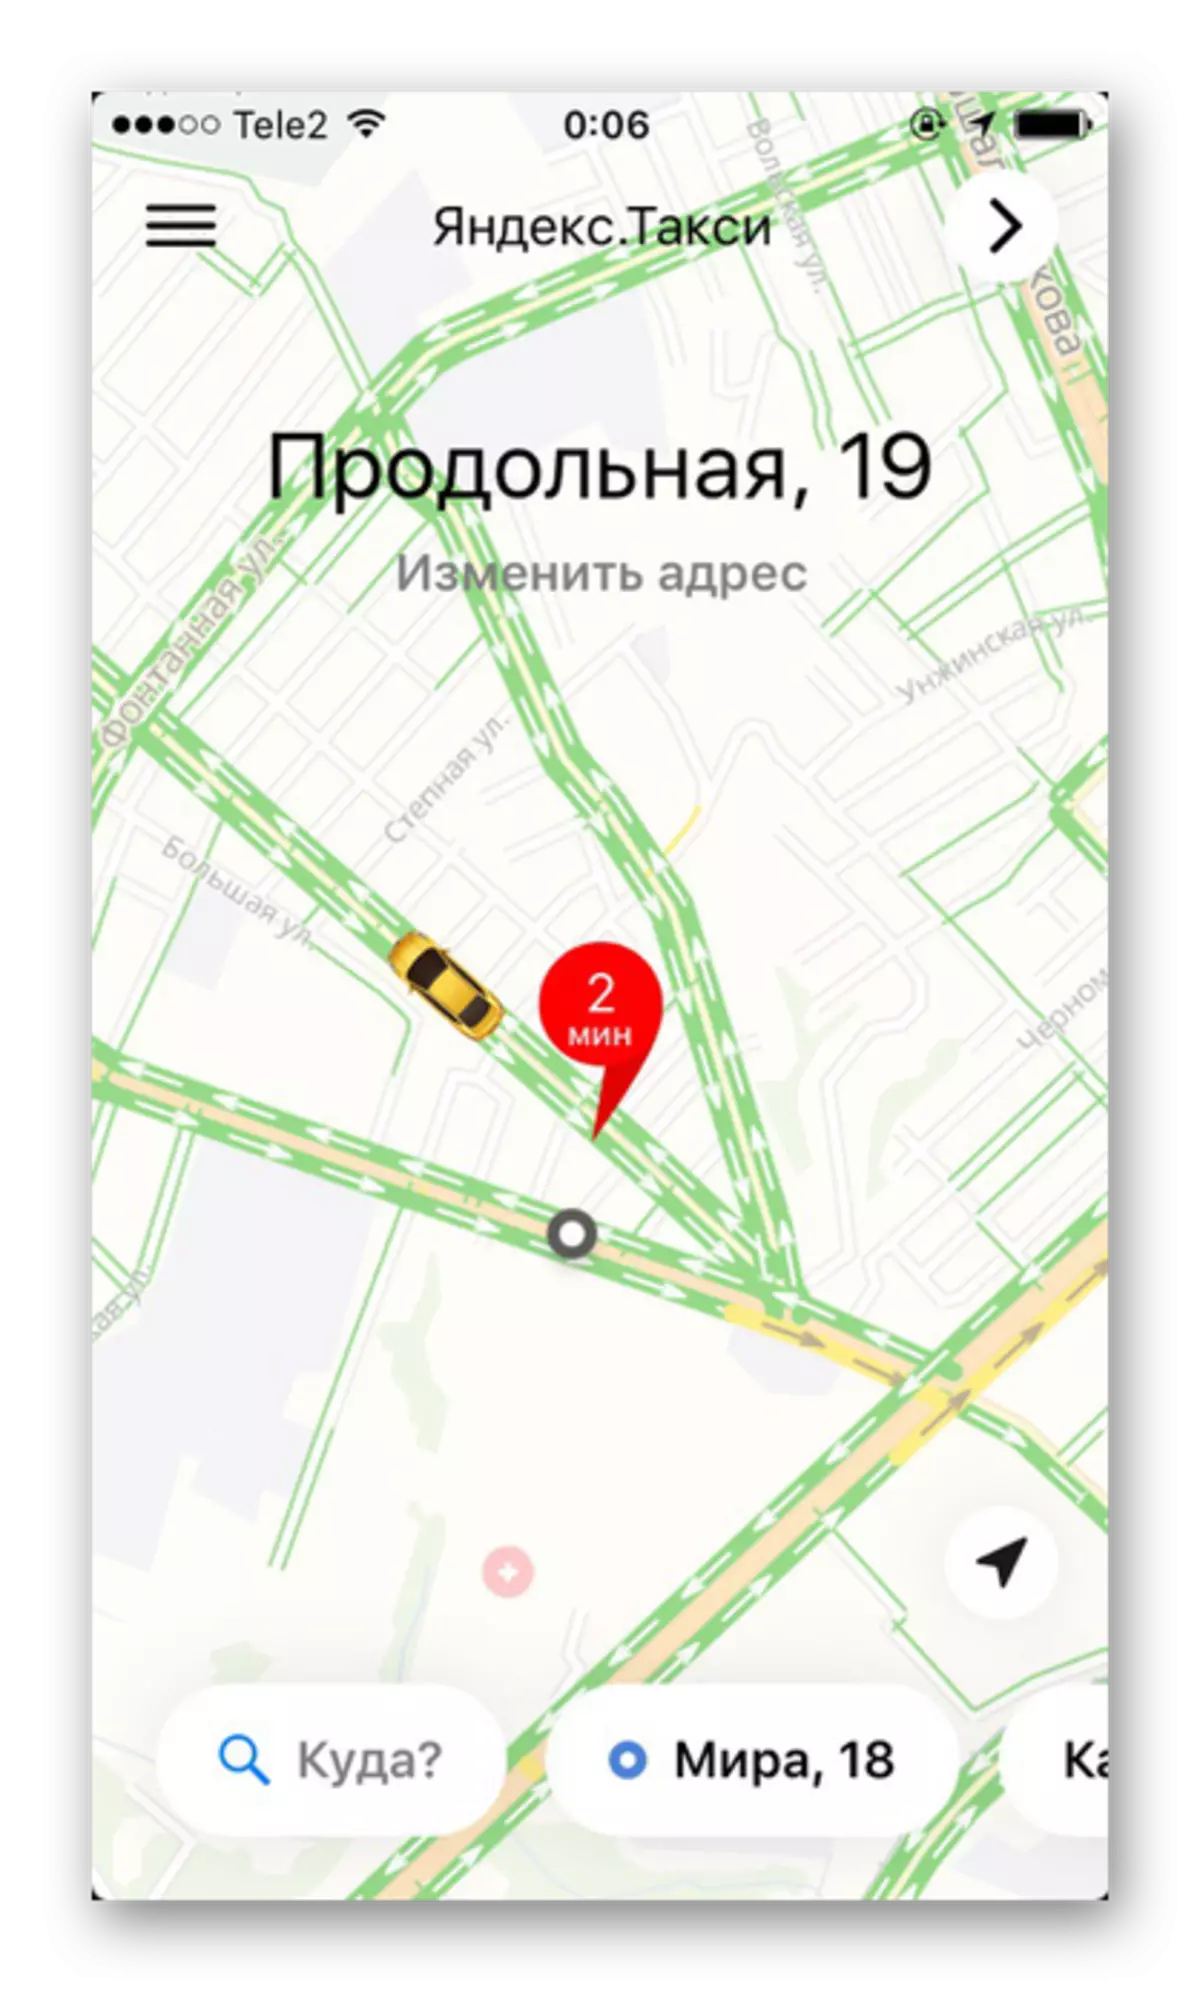 Iphone دىكى قاتناش قىستاڭچىلىق ۋە يول خىزمەتلىرىنى ئايلىنىپ ئايفوندا Yandex.taxi ئىلتىماسى